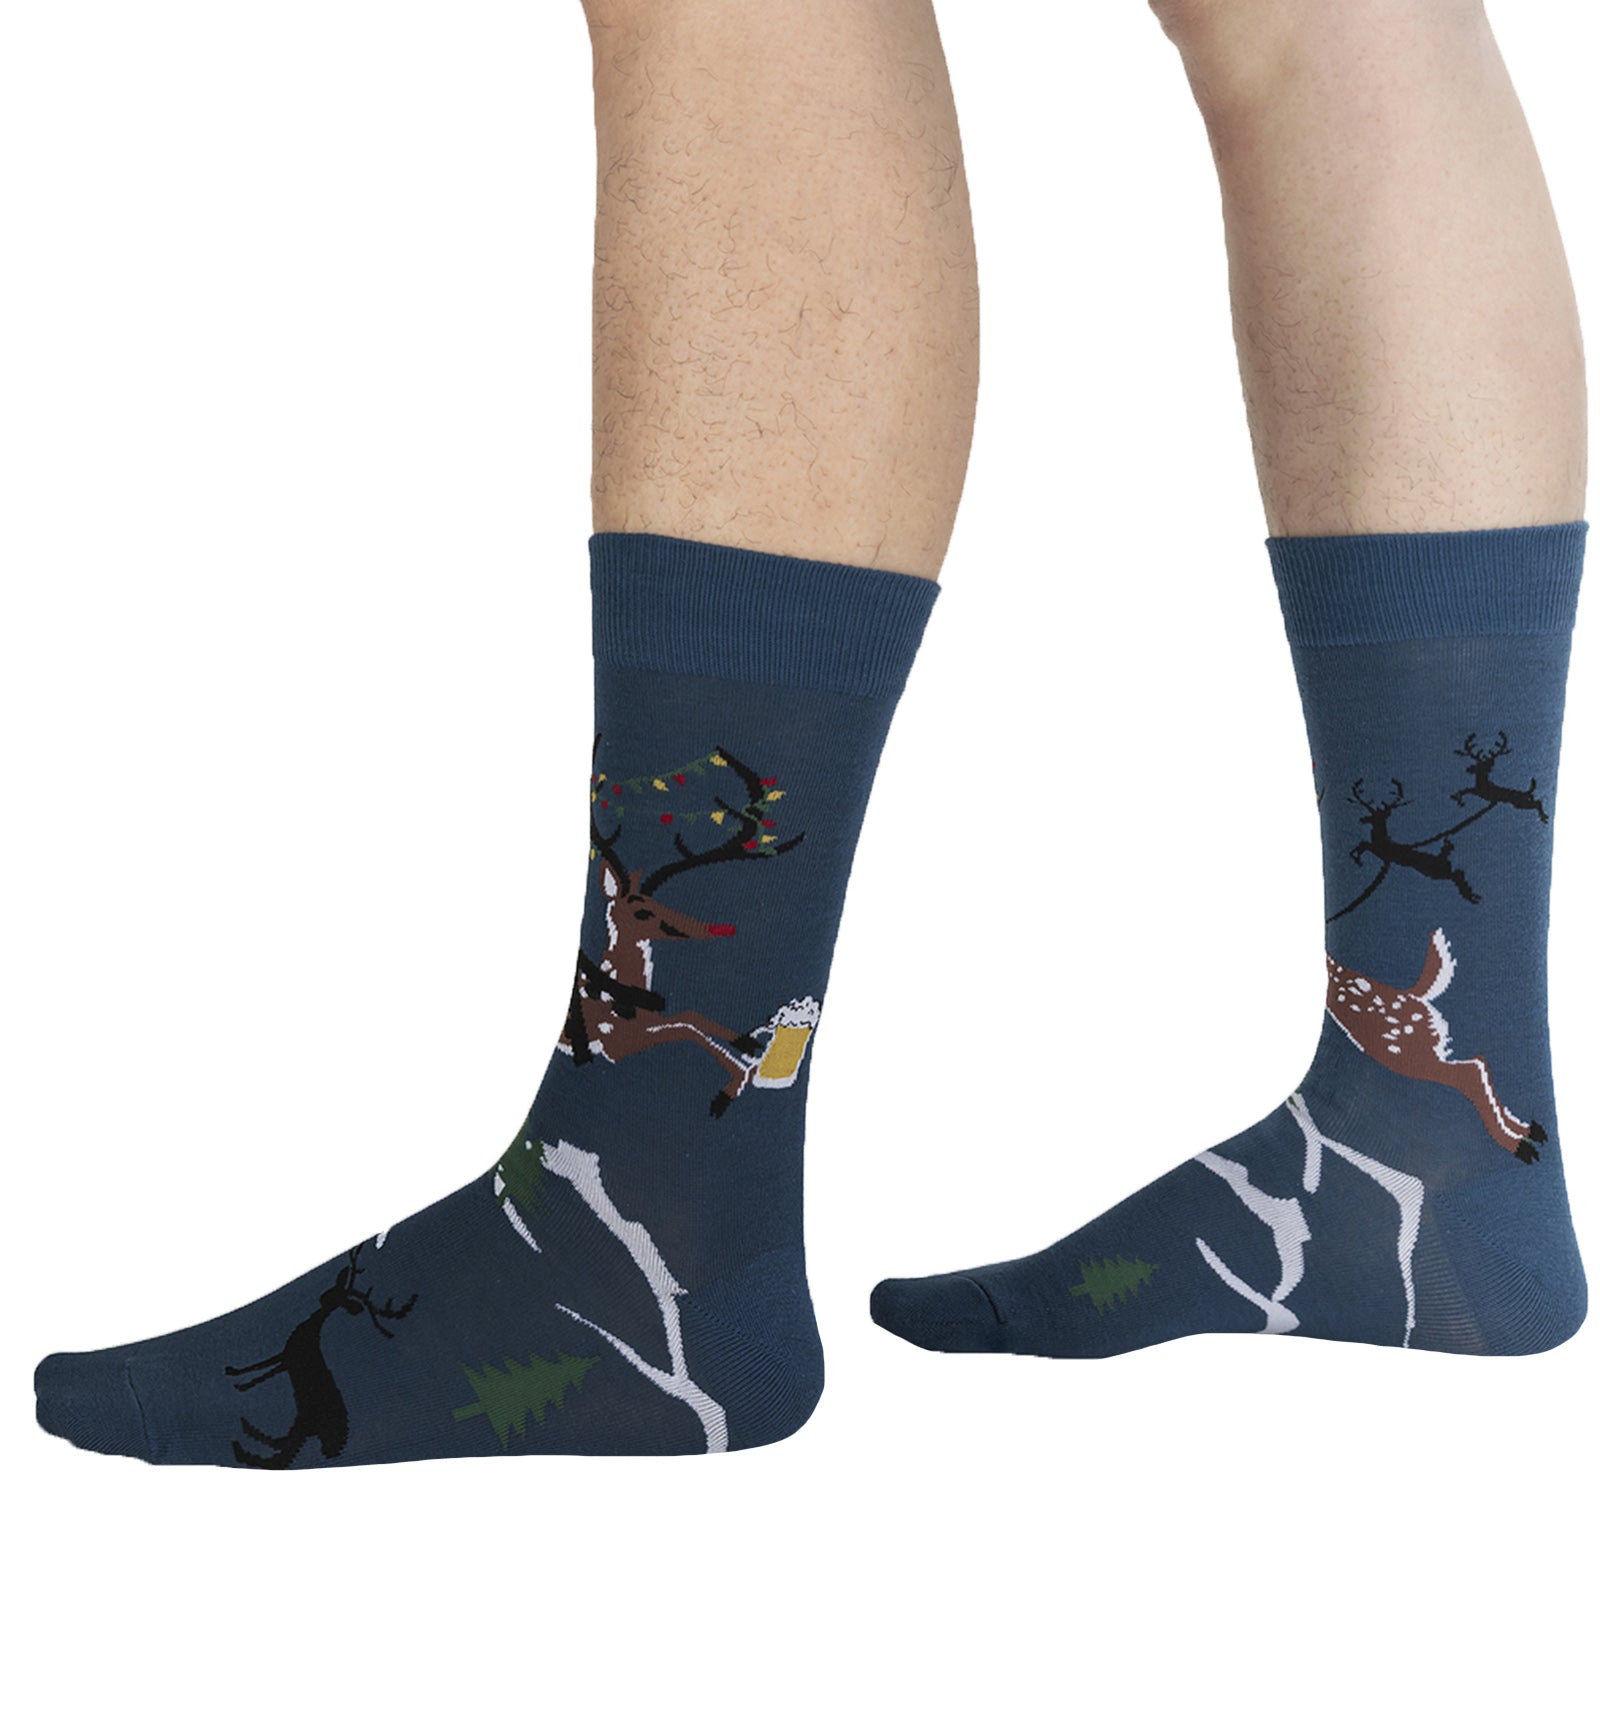 SOCK it to me Men's Crew Socks (MEF0637),Brew-Dolph - Brew-Dolph,One Size